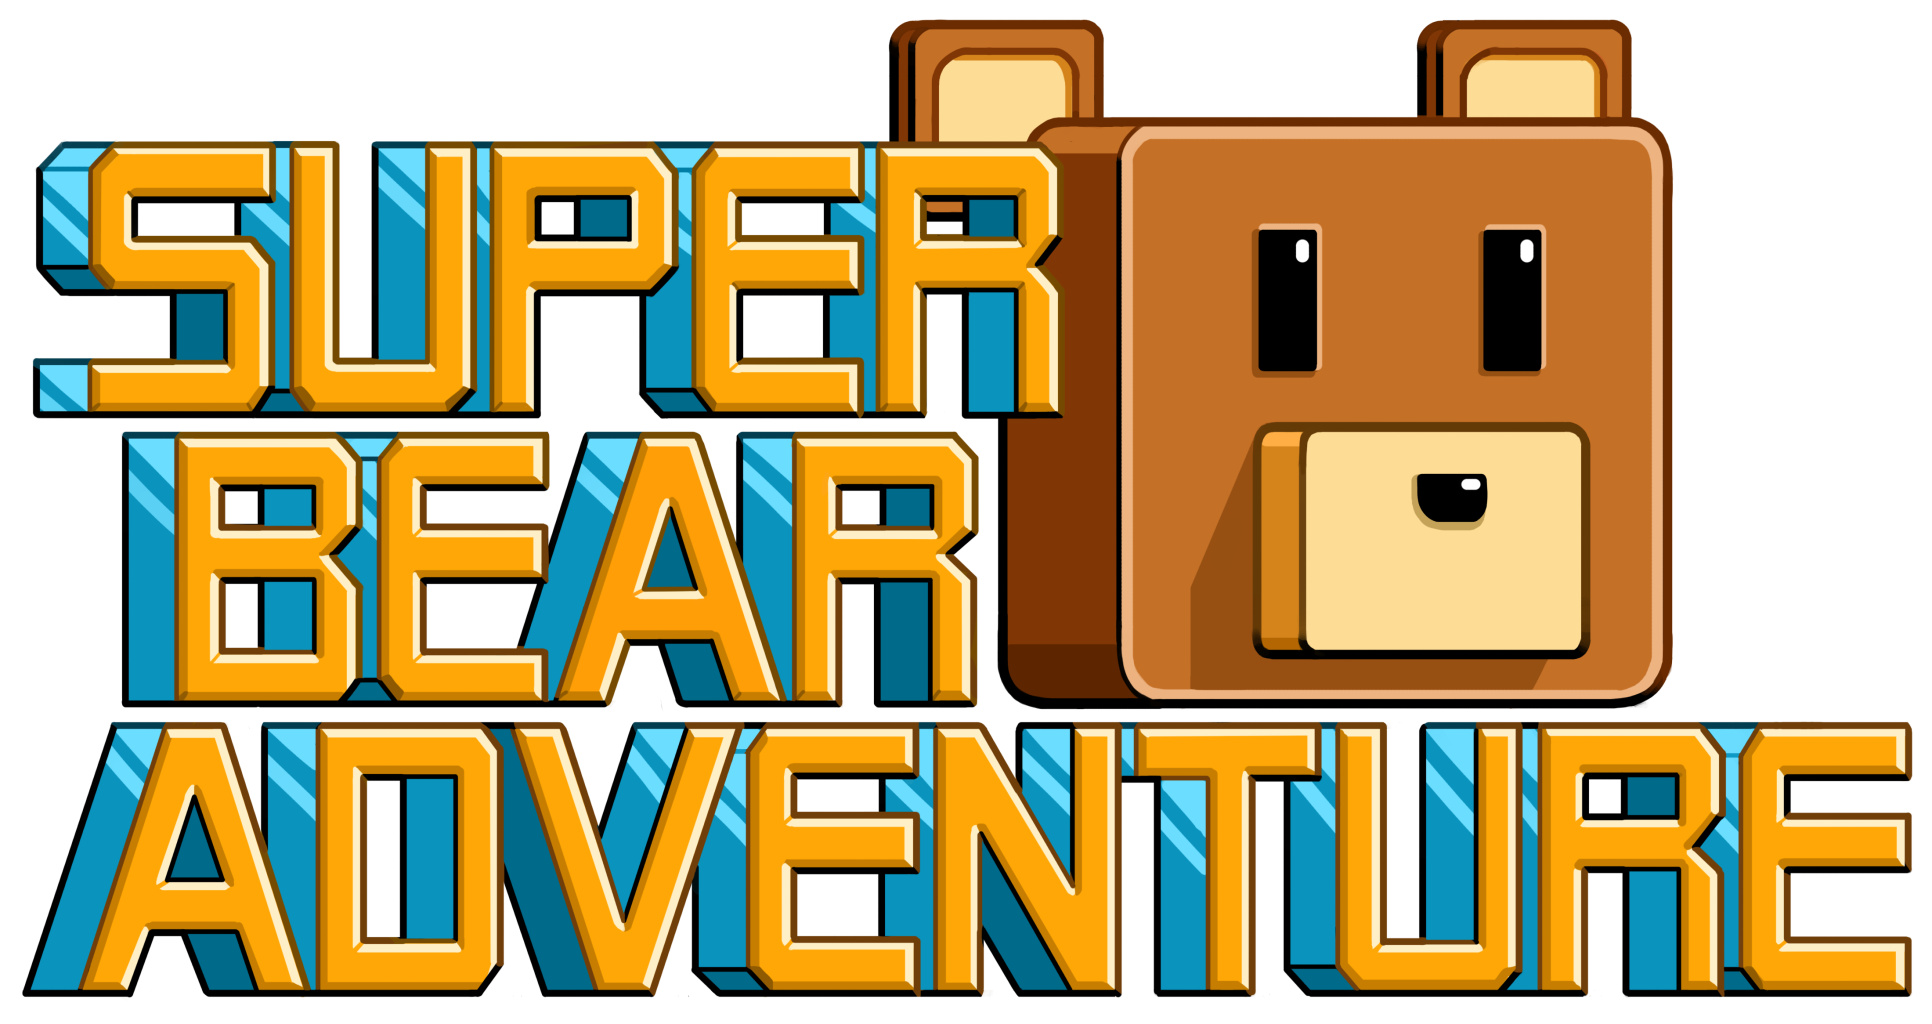 Best of Pixel bear adventure 2